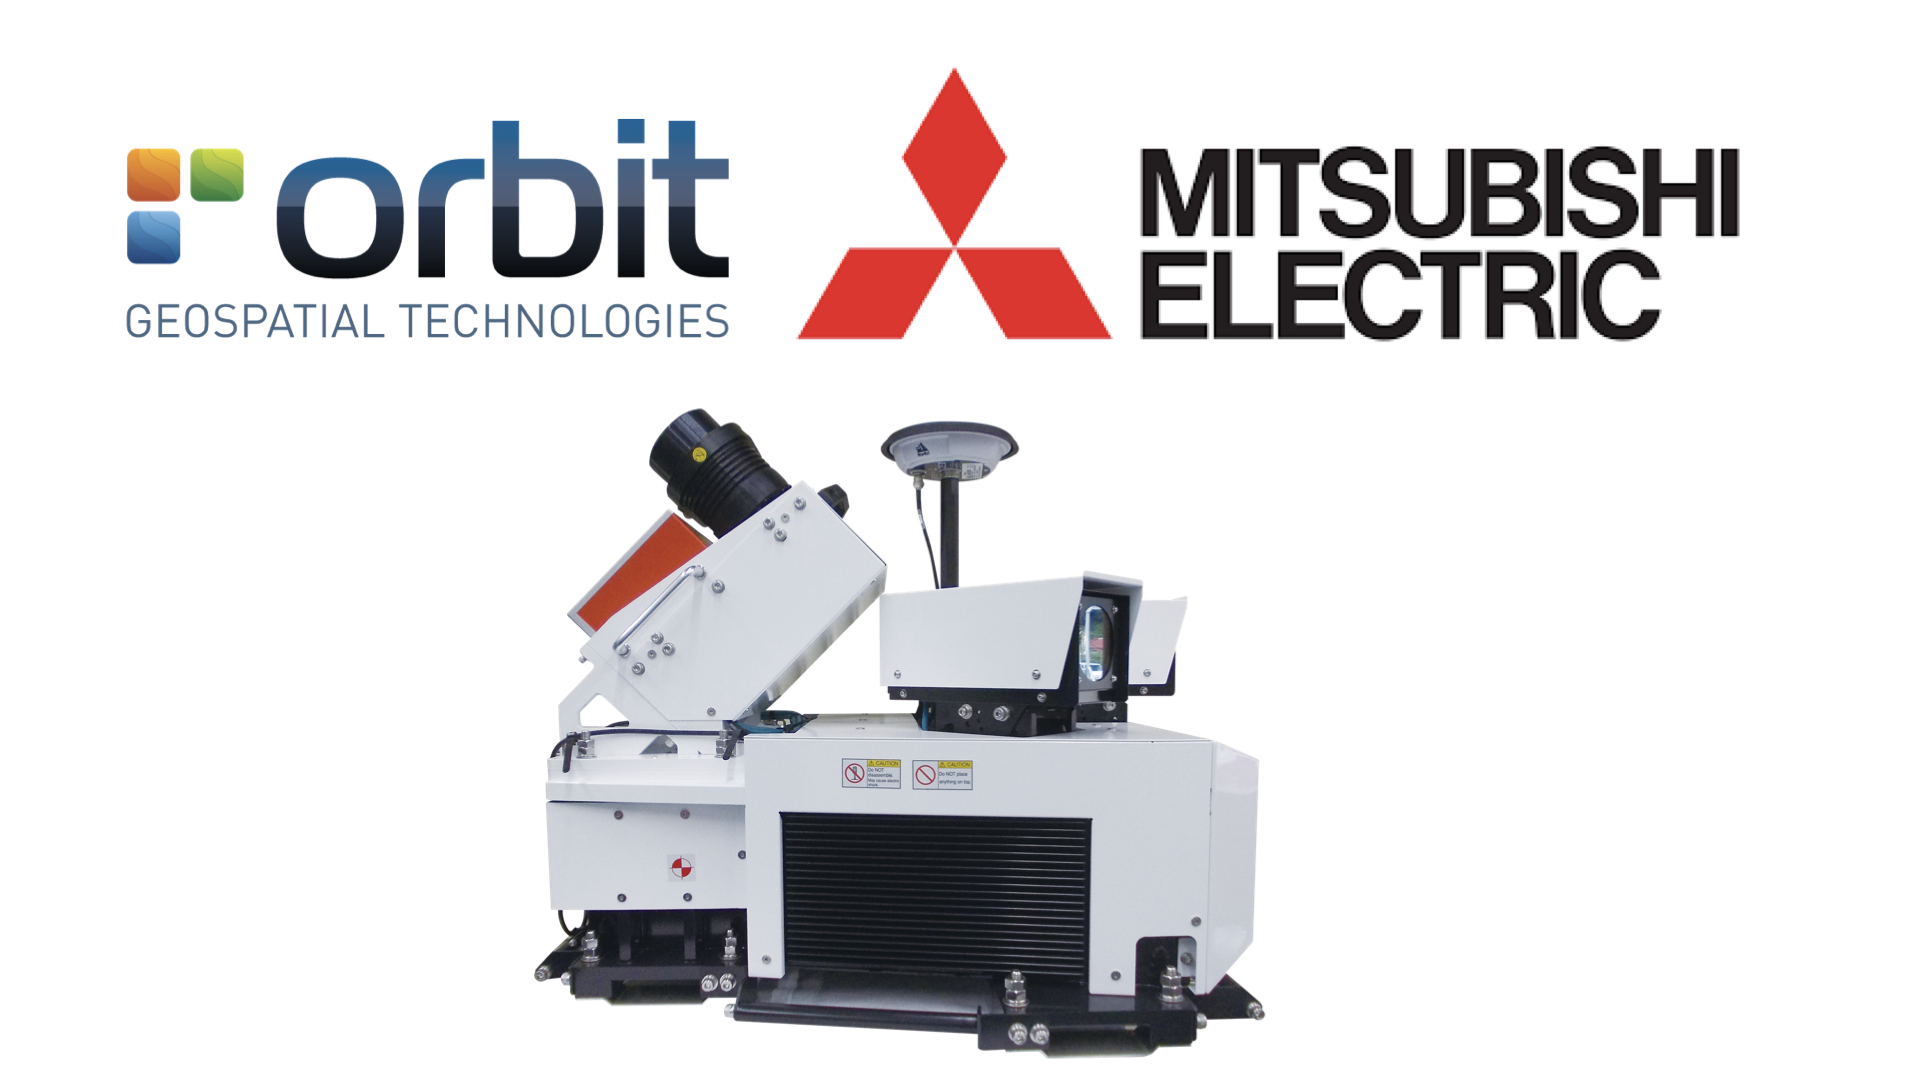 Orbit GT Orbit GT and Mitsubishi to co-operate and demo at Intergeo, Frankfurt